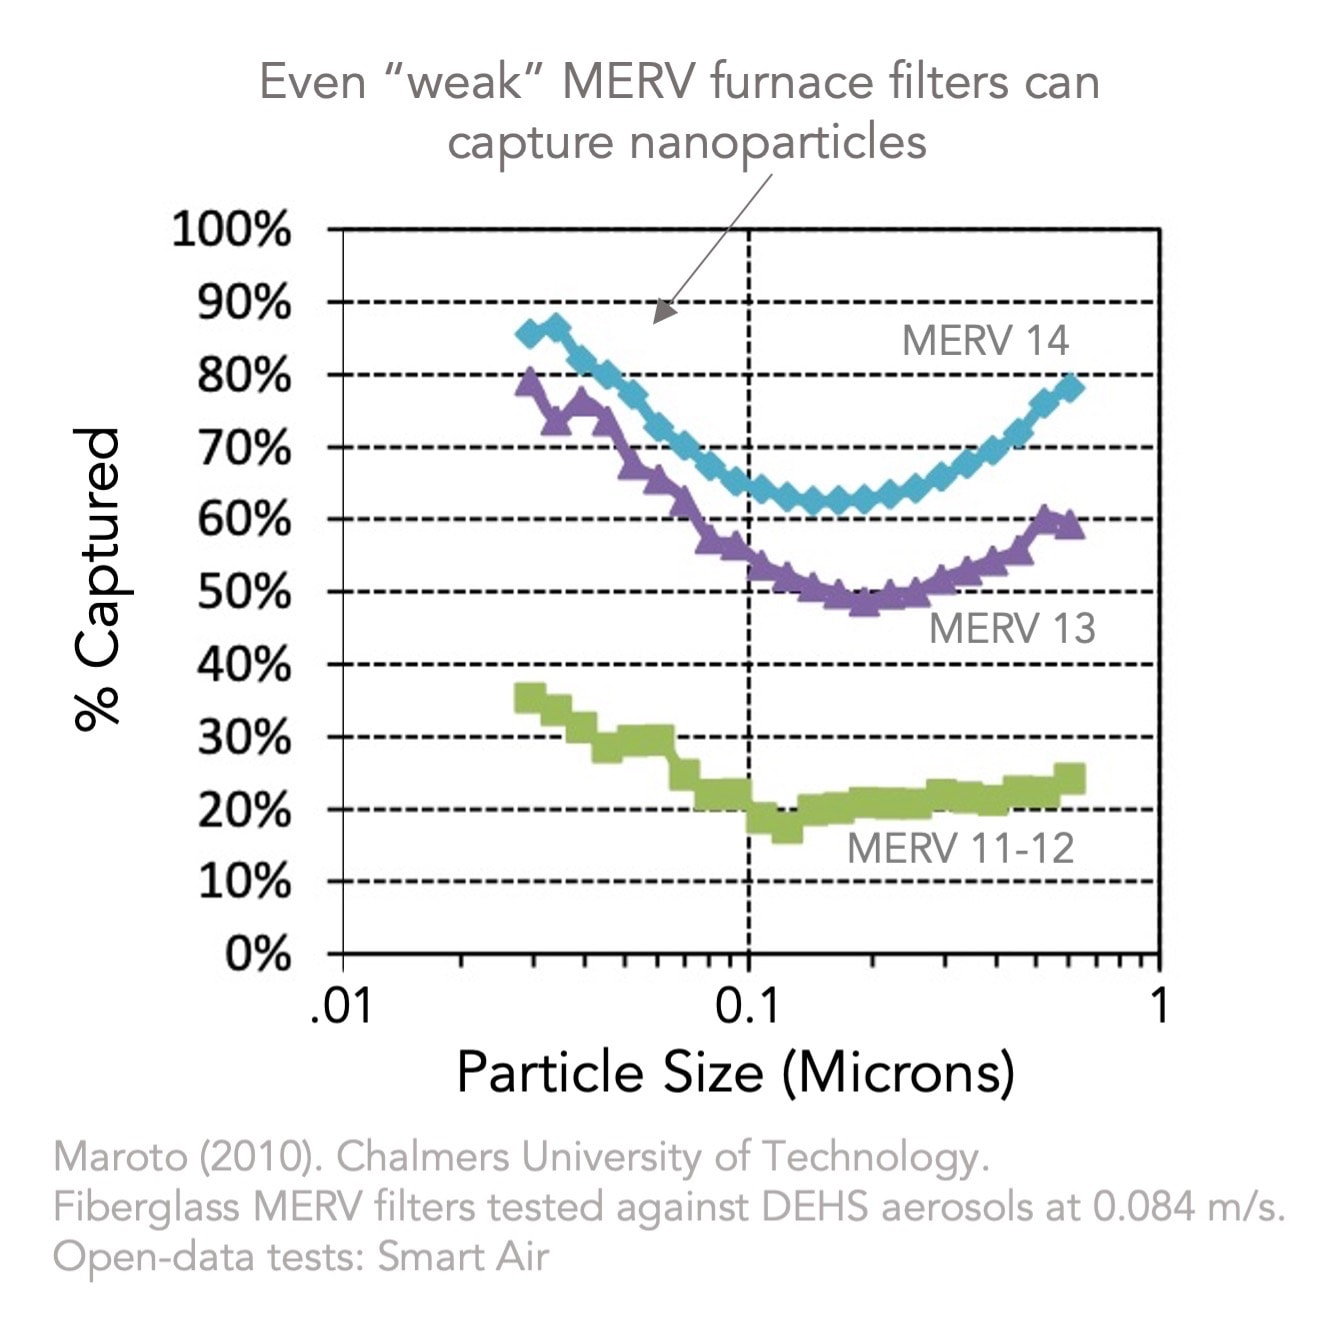 MERV Filters Capture Nanoparticles